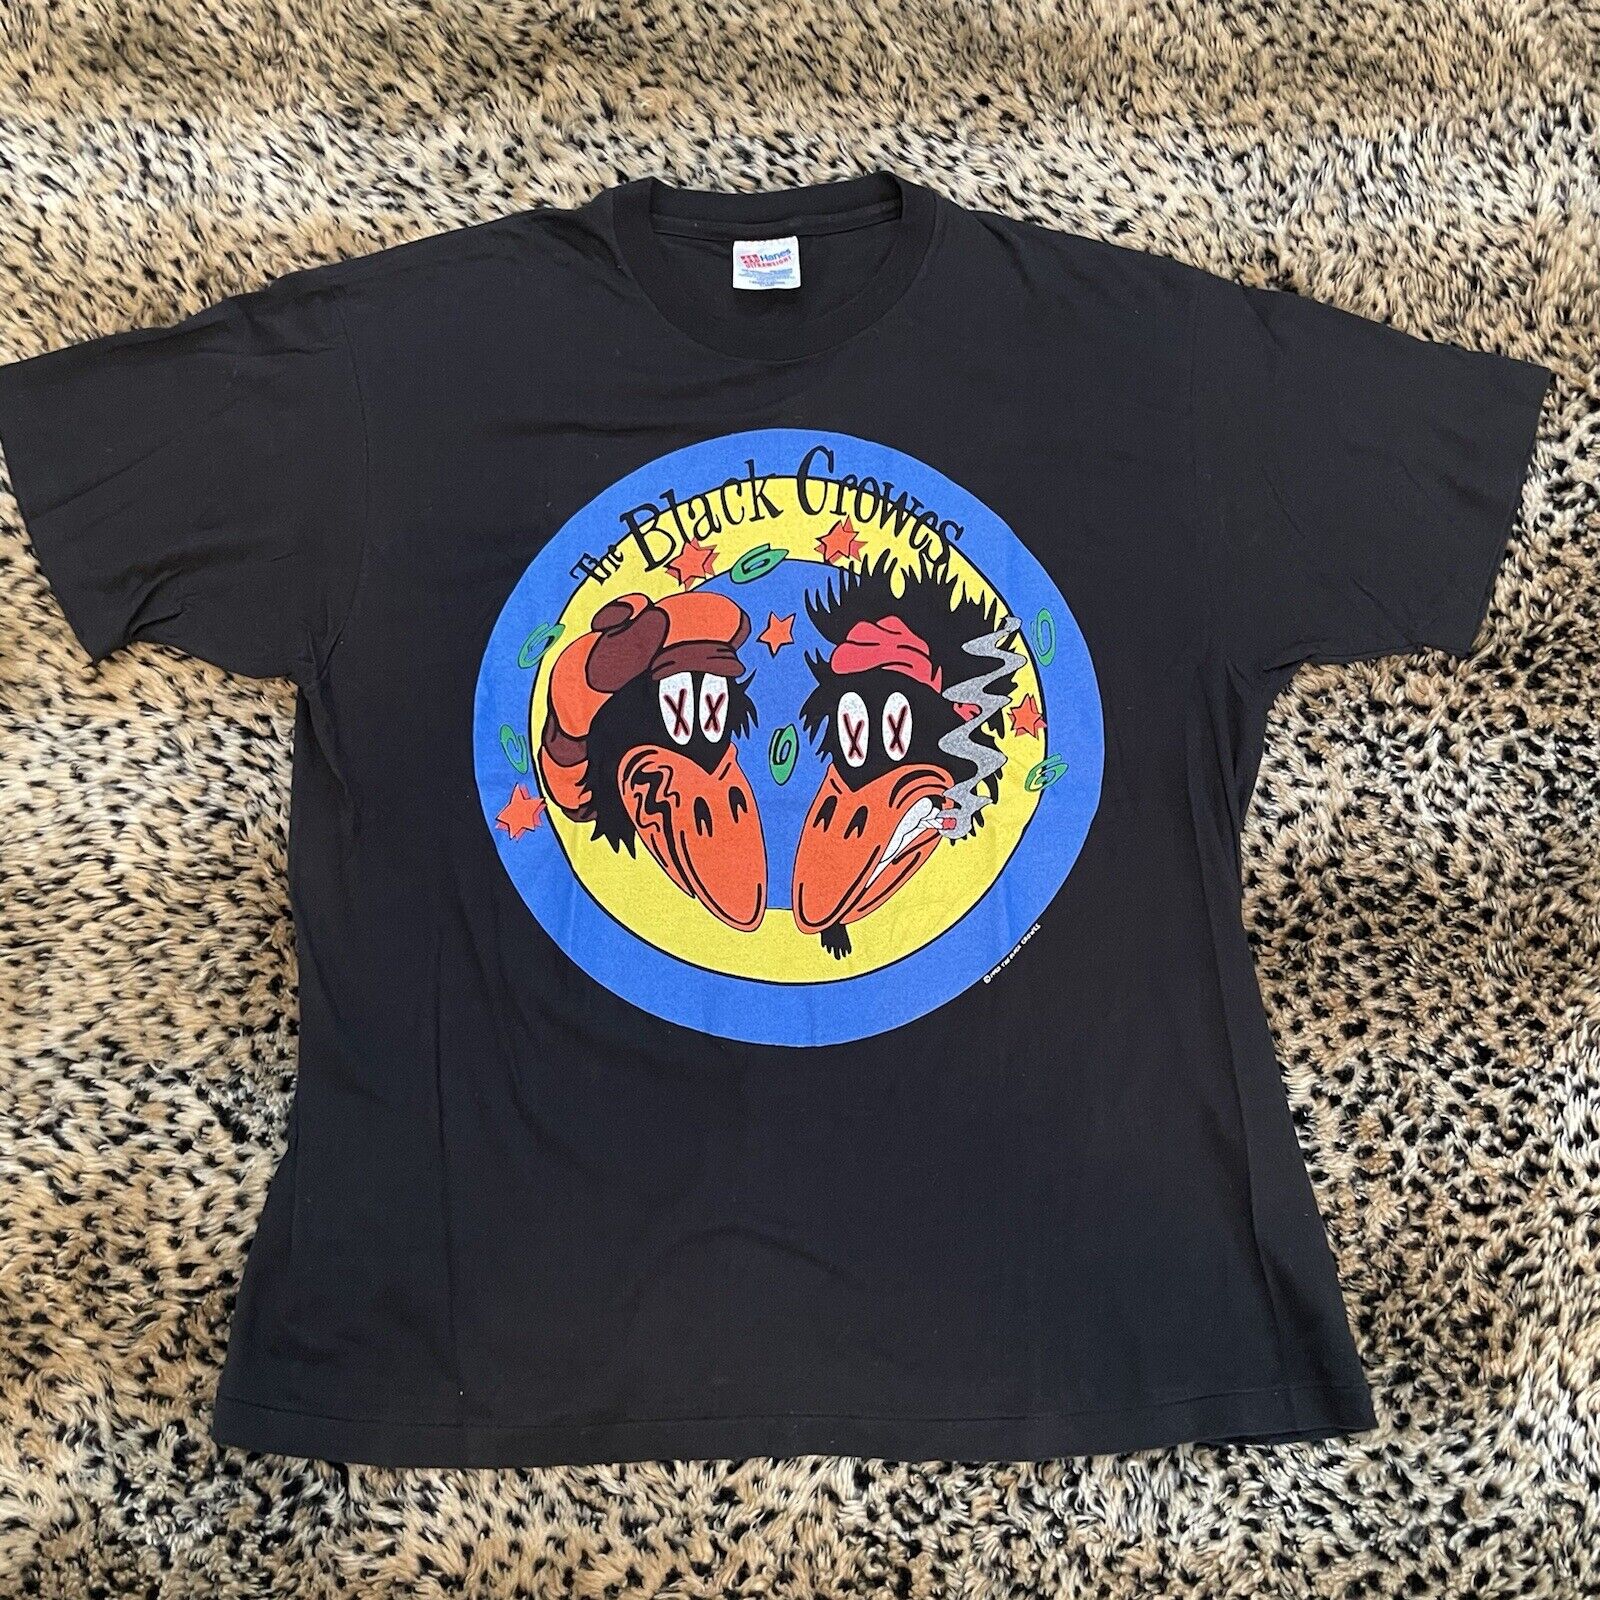 schaak Uitstekend mengsel 1992 Black Crowes Tour Shirt sz XL vintage single stitch NOS NWOT Deadstock  90s | eBay